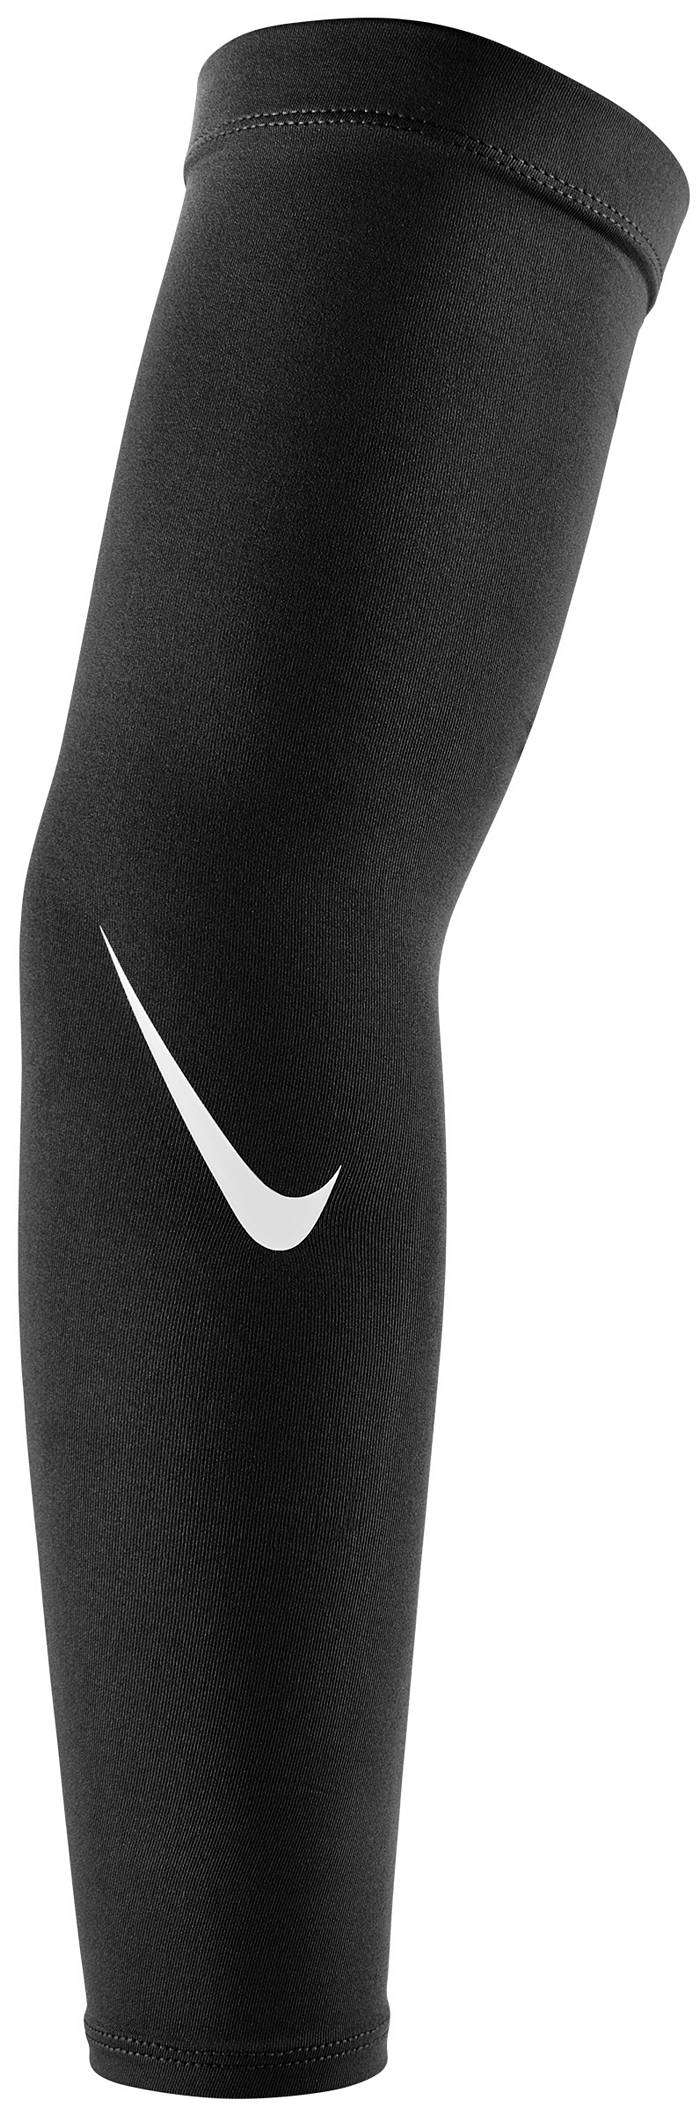 Nike Lightweight Running Sleeves - White